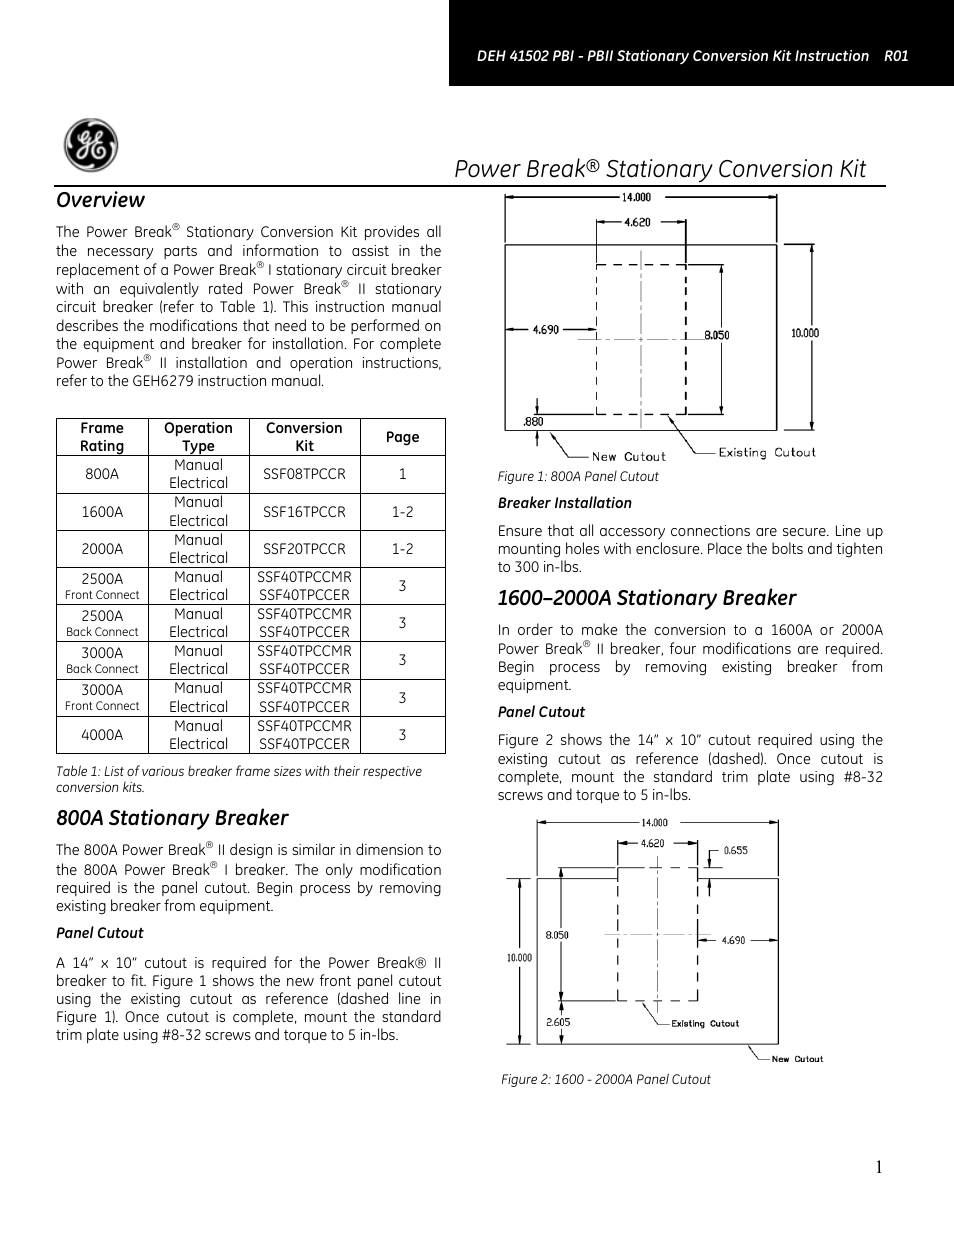 Power Break Stationary Conversion Kit